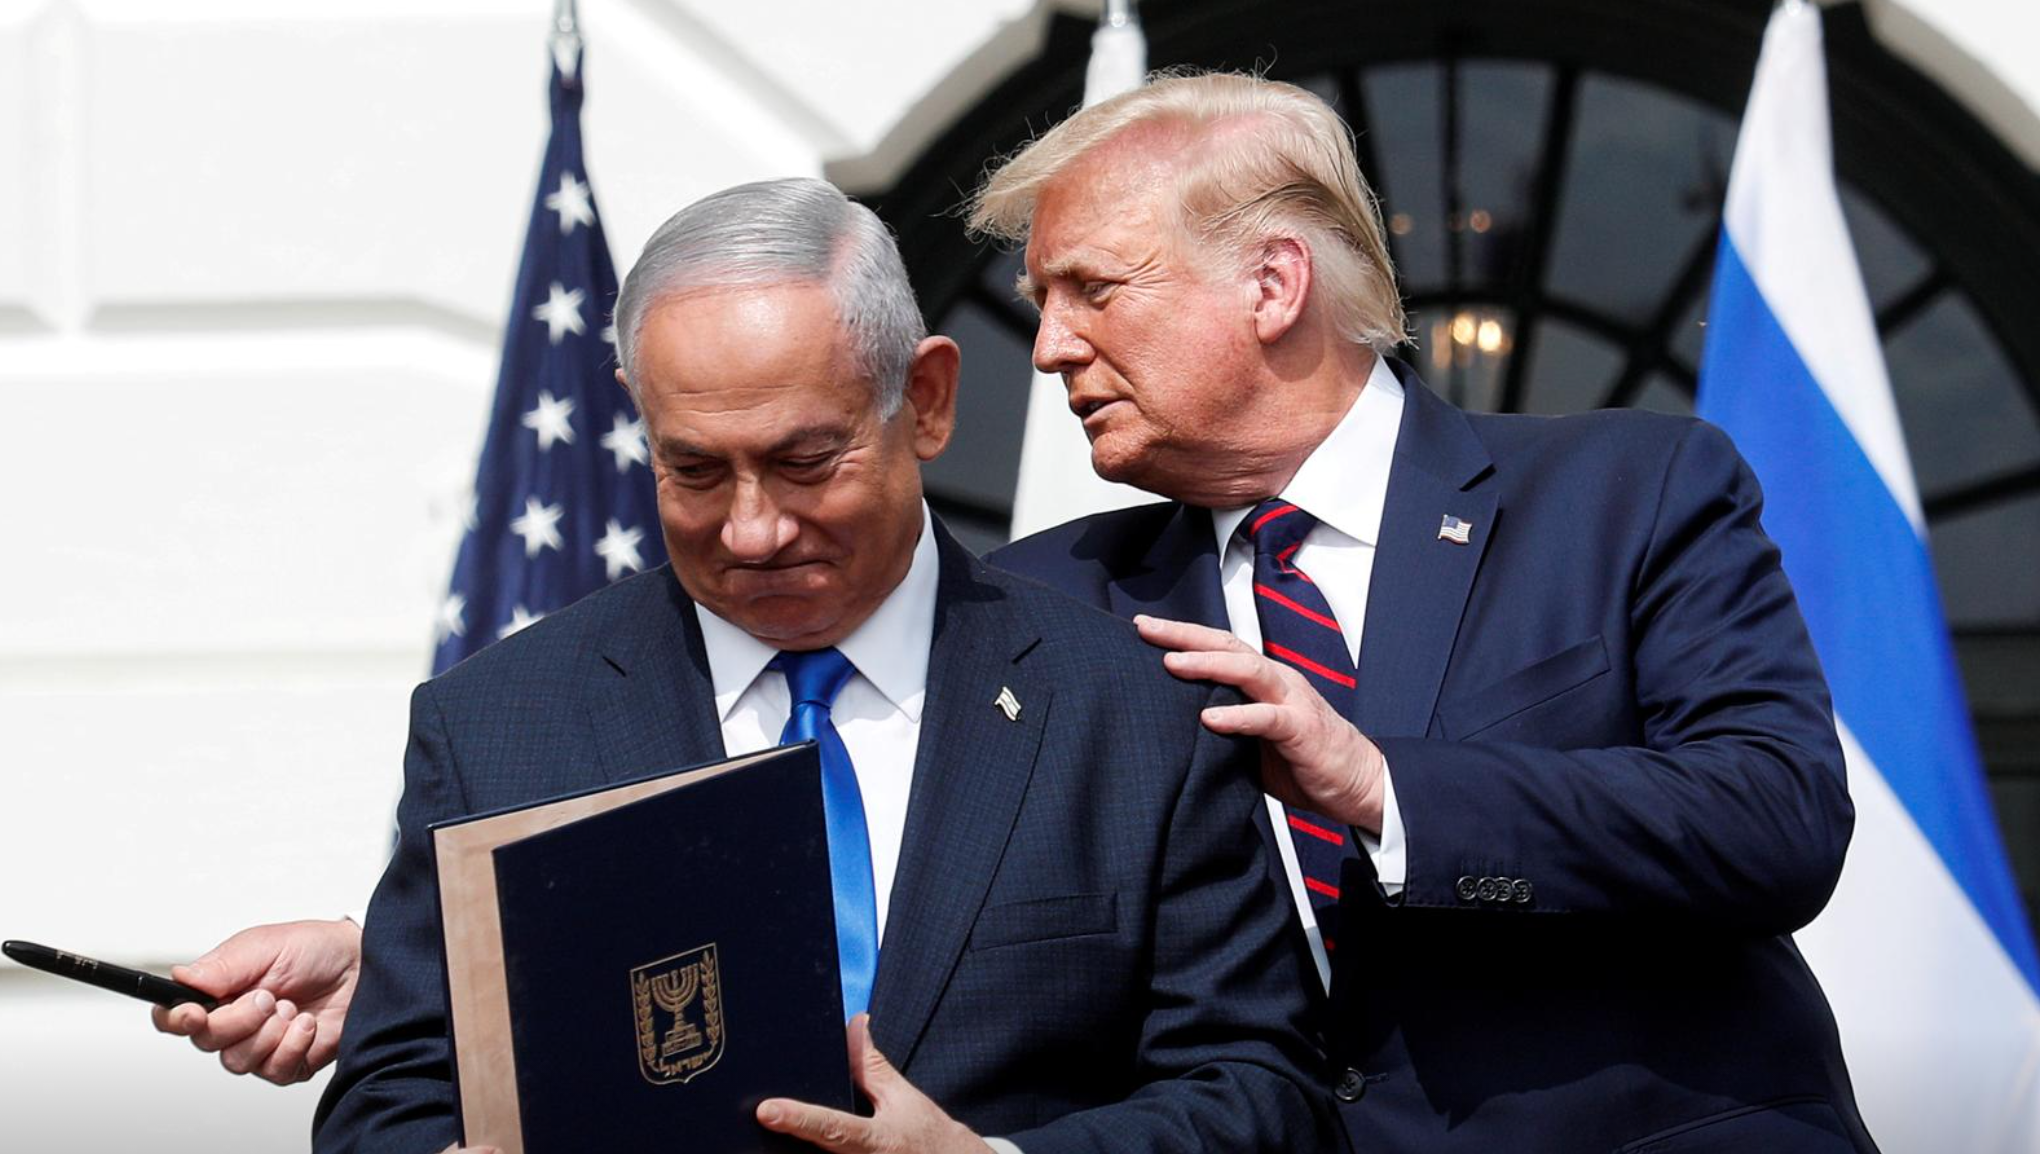 Israel's Netanyahu congratulates Biden on US election win, thanks Trump